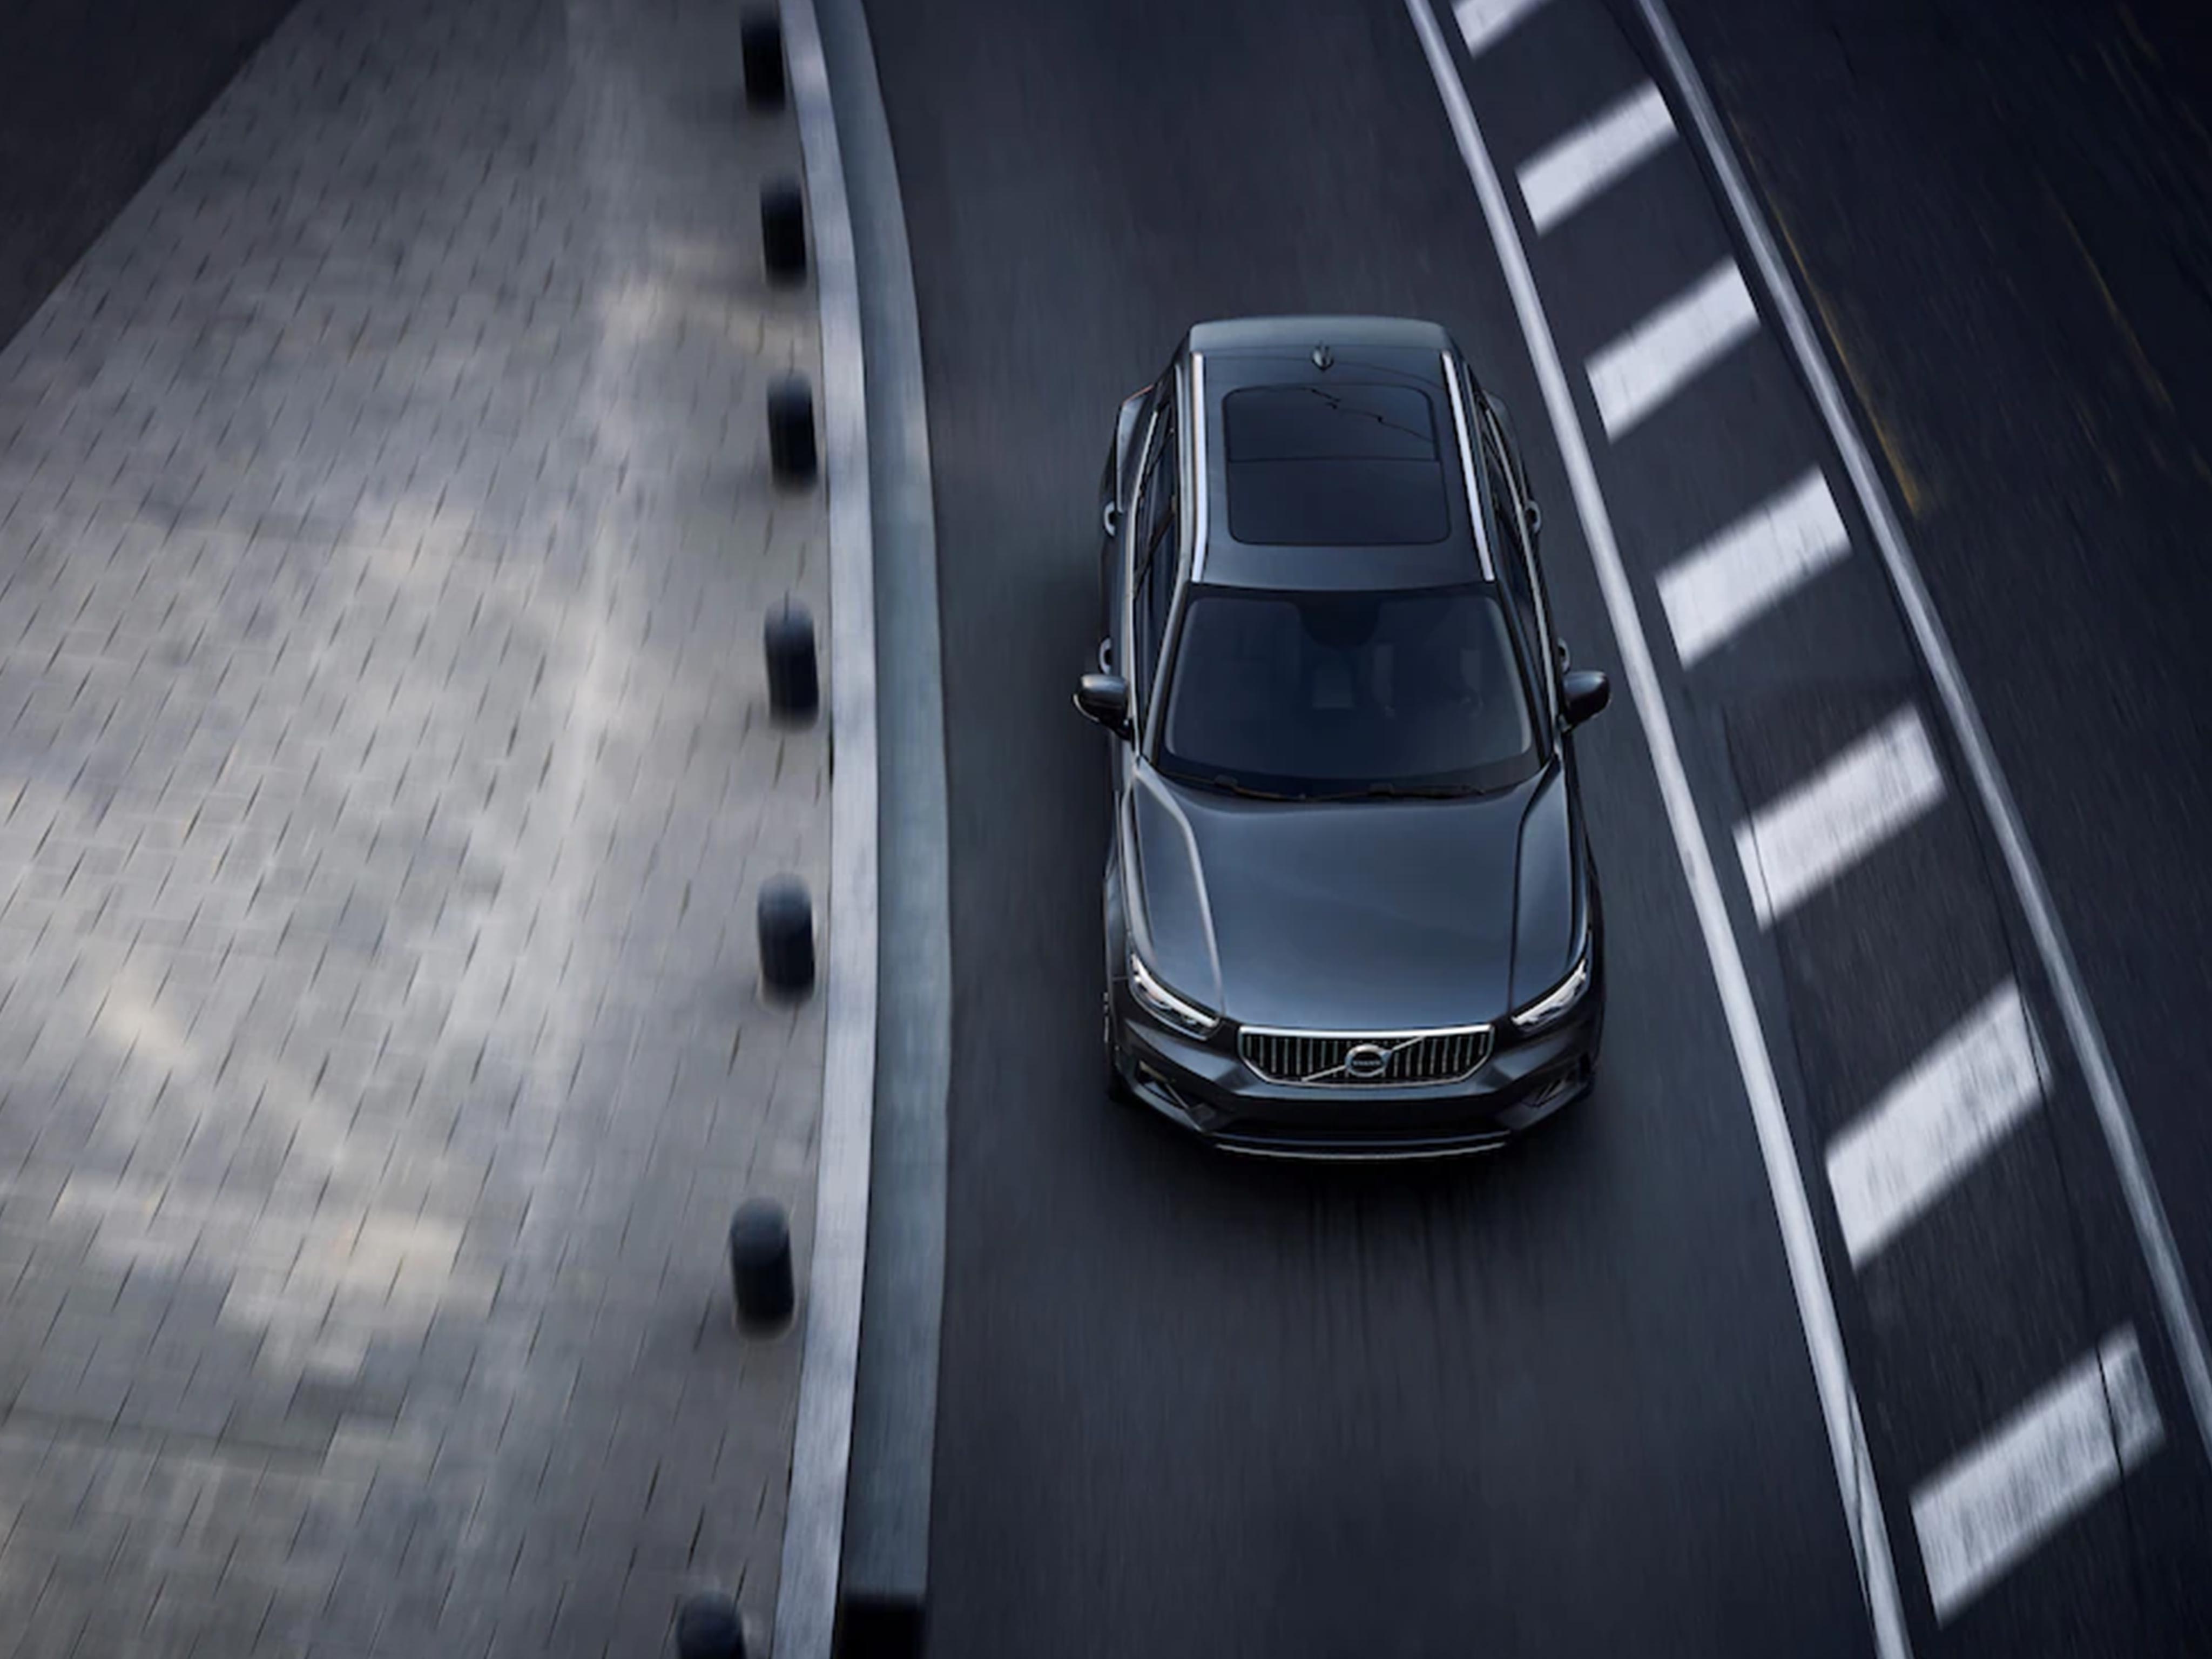 Black Volvo driving on road